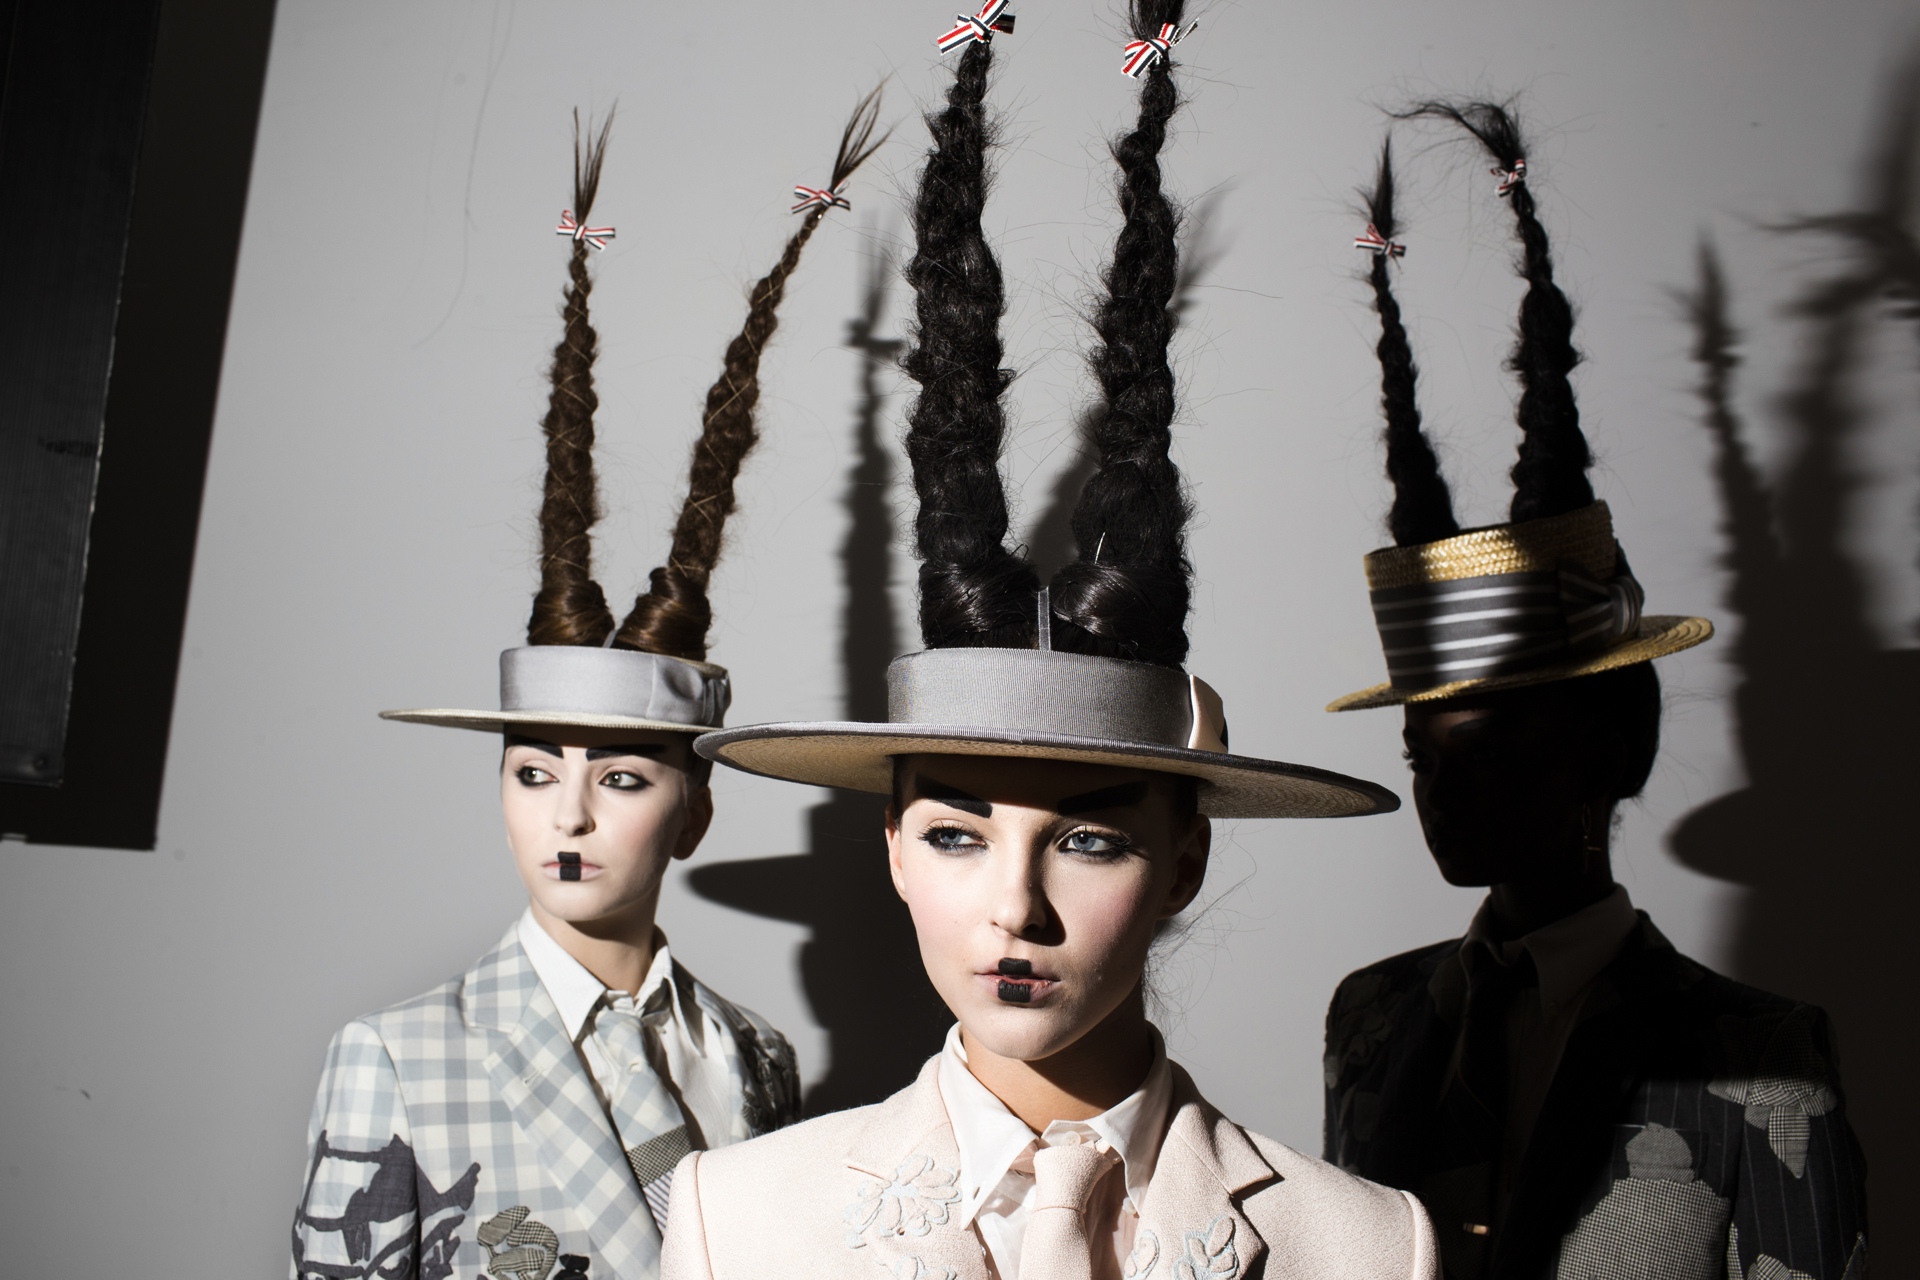 Thom Browne (Hats and Hair) by Landon Nordeman